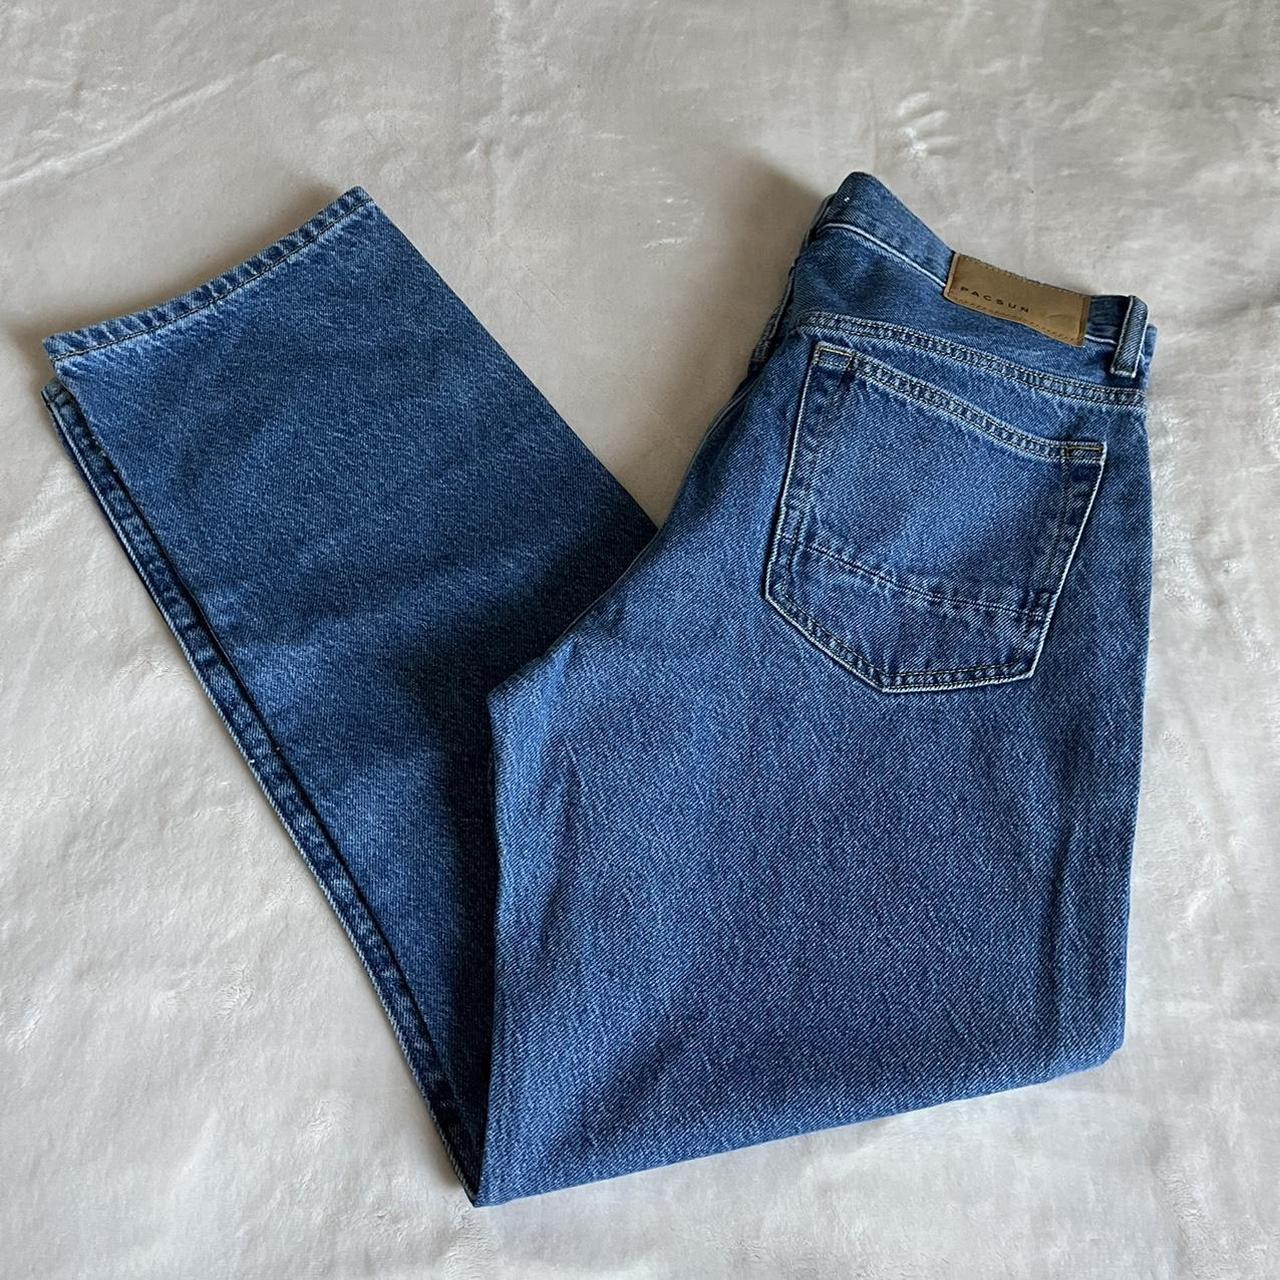 Product Image 1 - PacSun Medium Indigo Baggy Jeans

Nwt